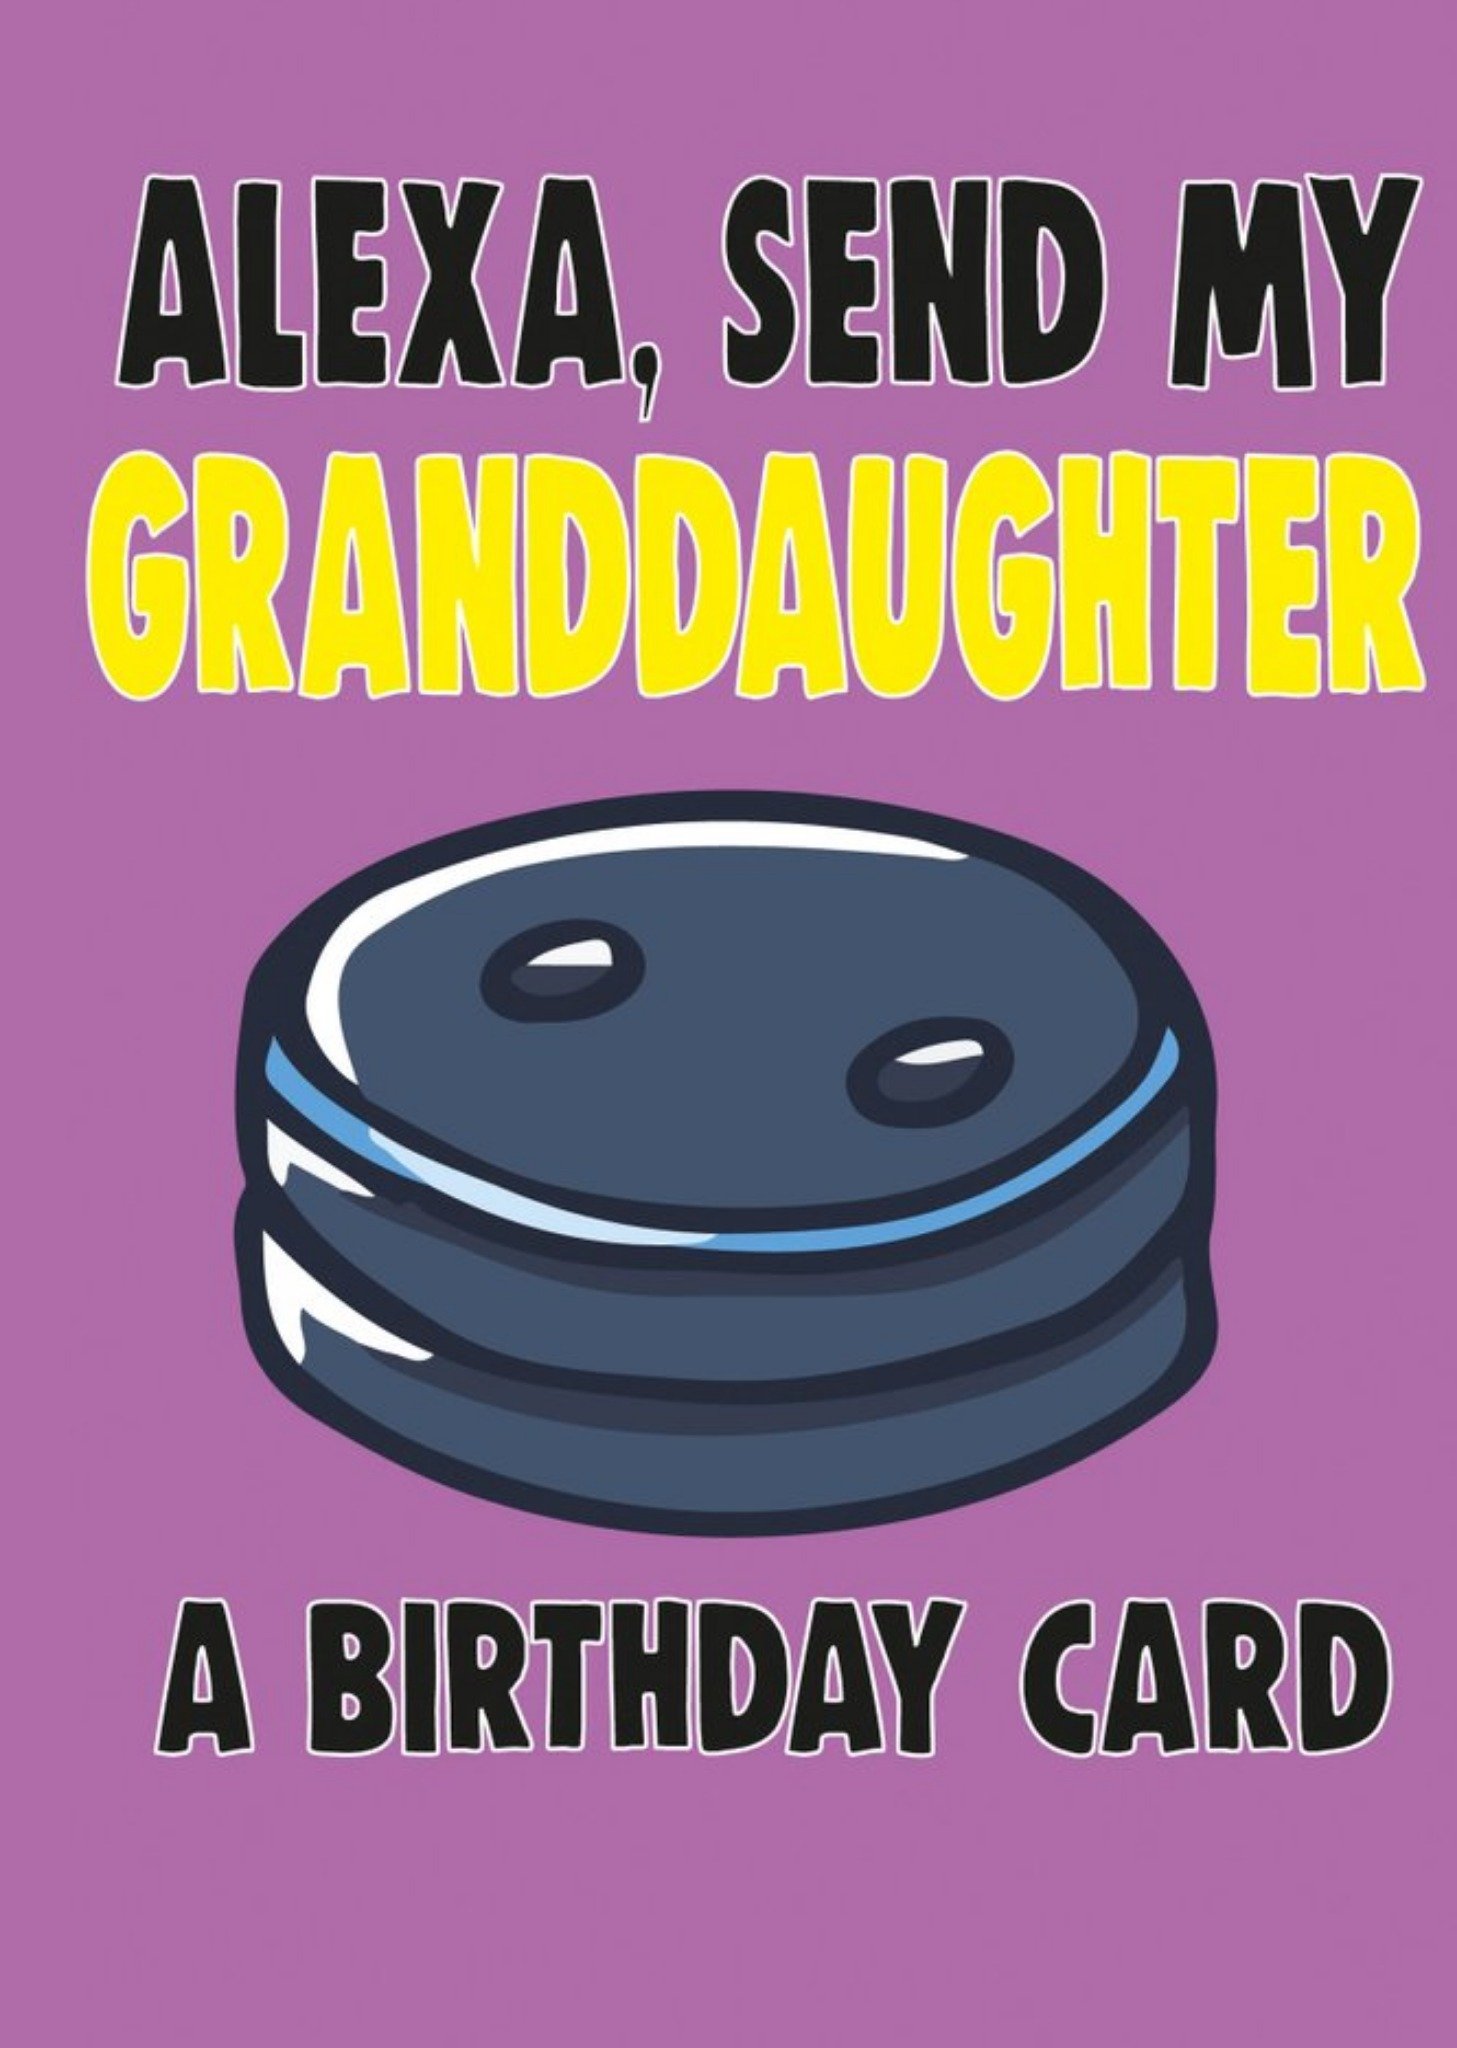 Moonpig Bright Bold Typography With An Illustration Of Alexa Granddaughter Birthday Card Ecard